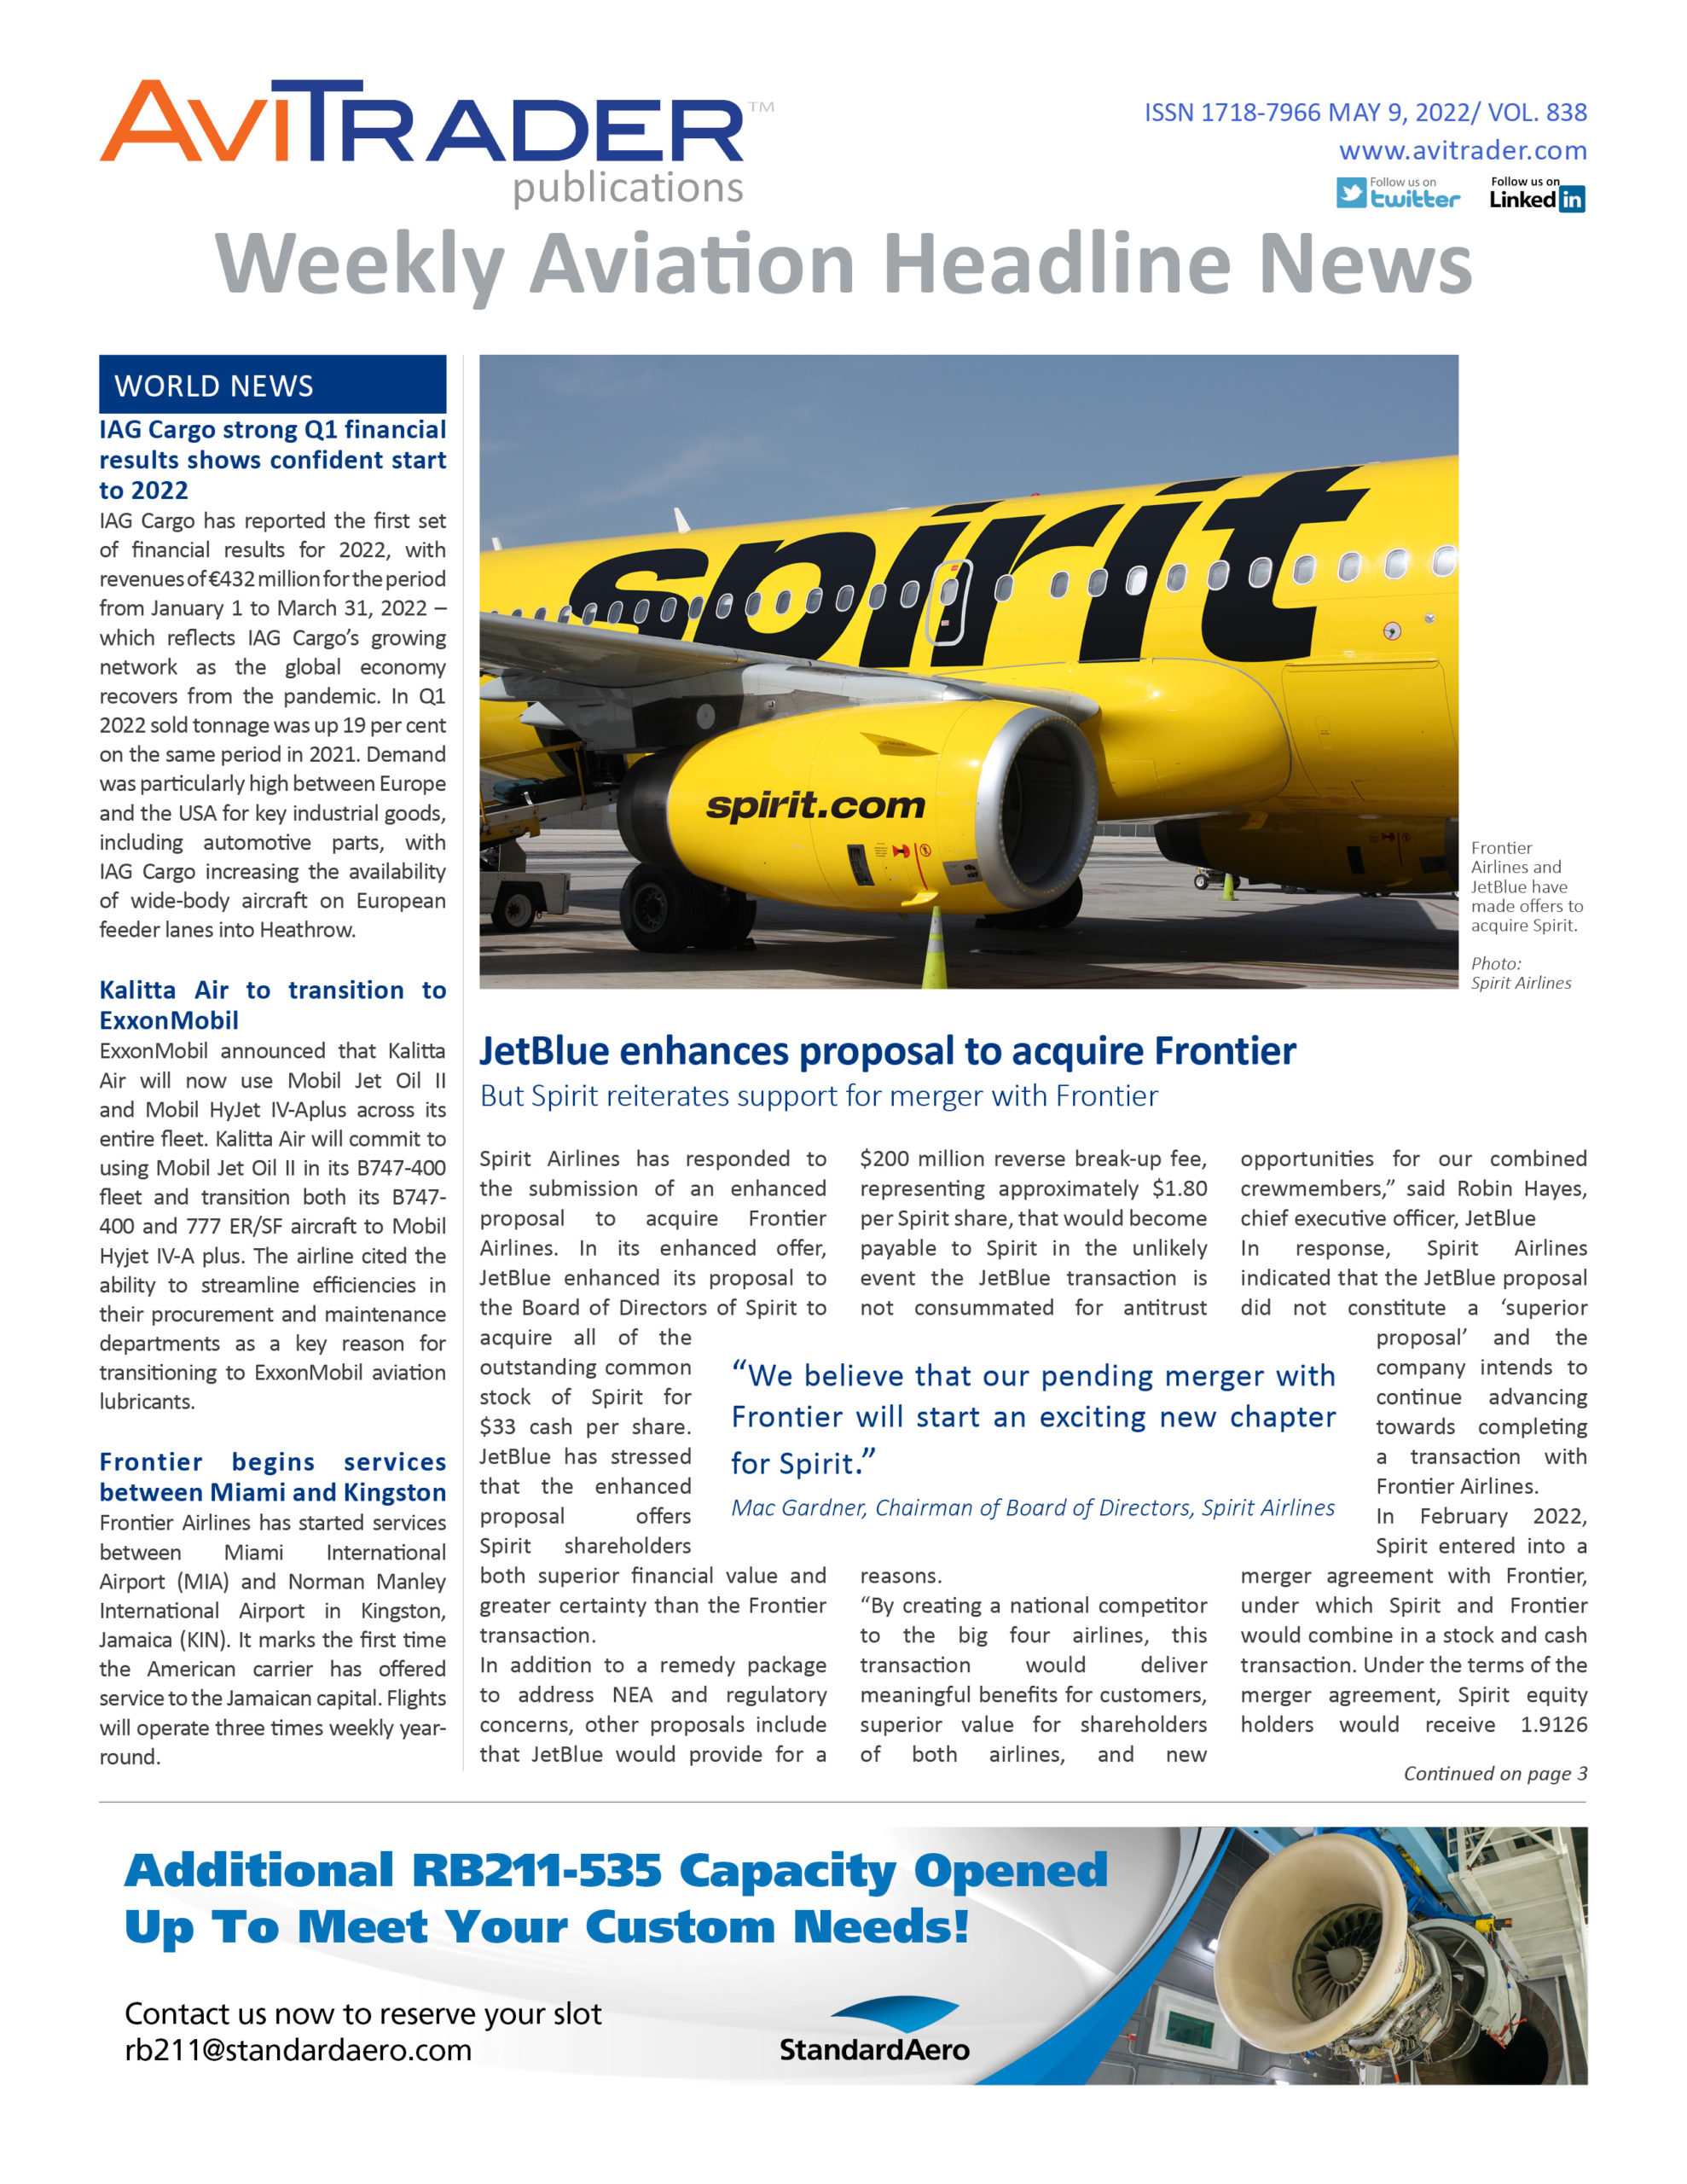 AviTrader_Weekly_Headline_News_Cover_2022-05-09